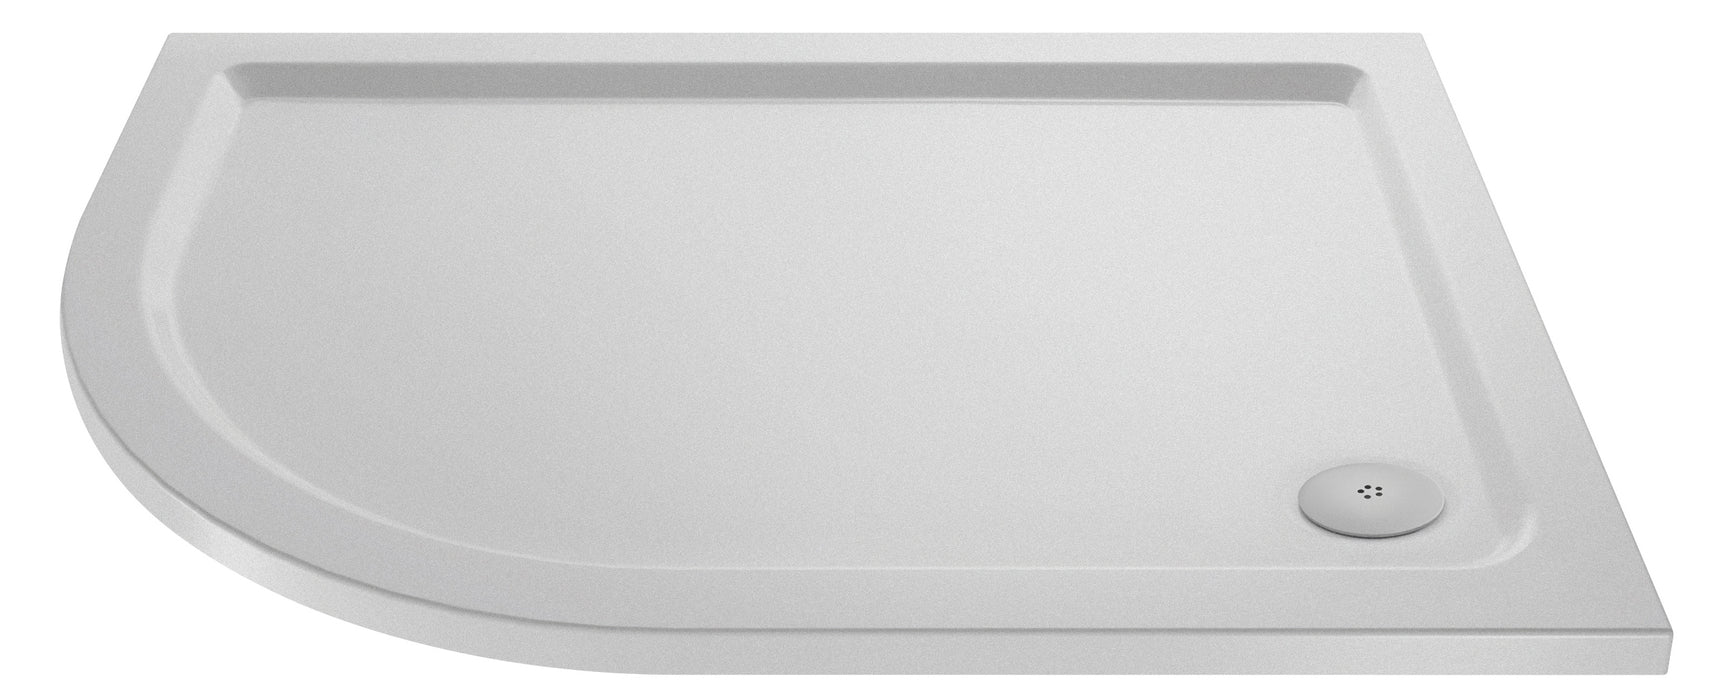 Slip Resistant Offset Quadrant Shower Tray LH 900 x 760mm